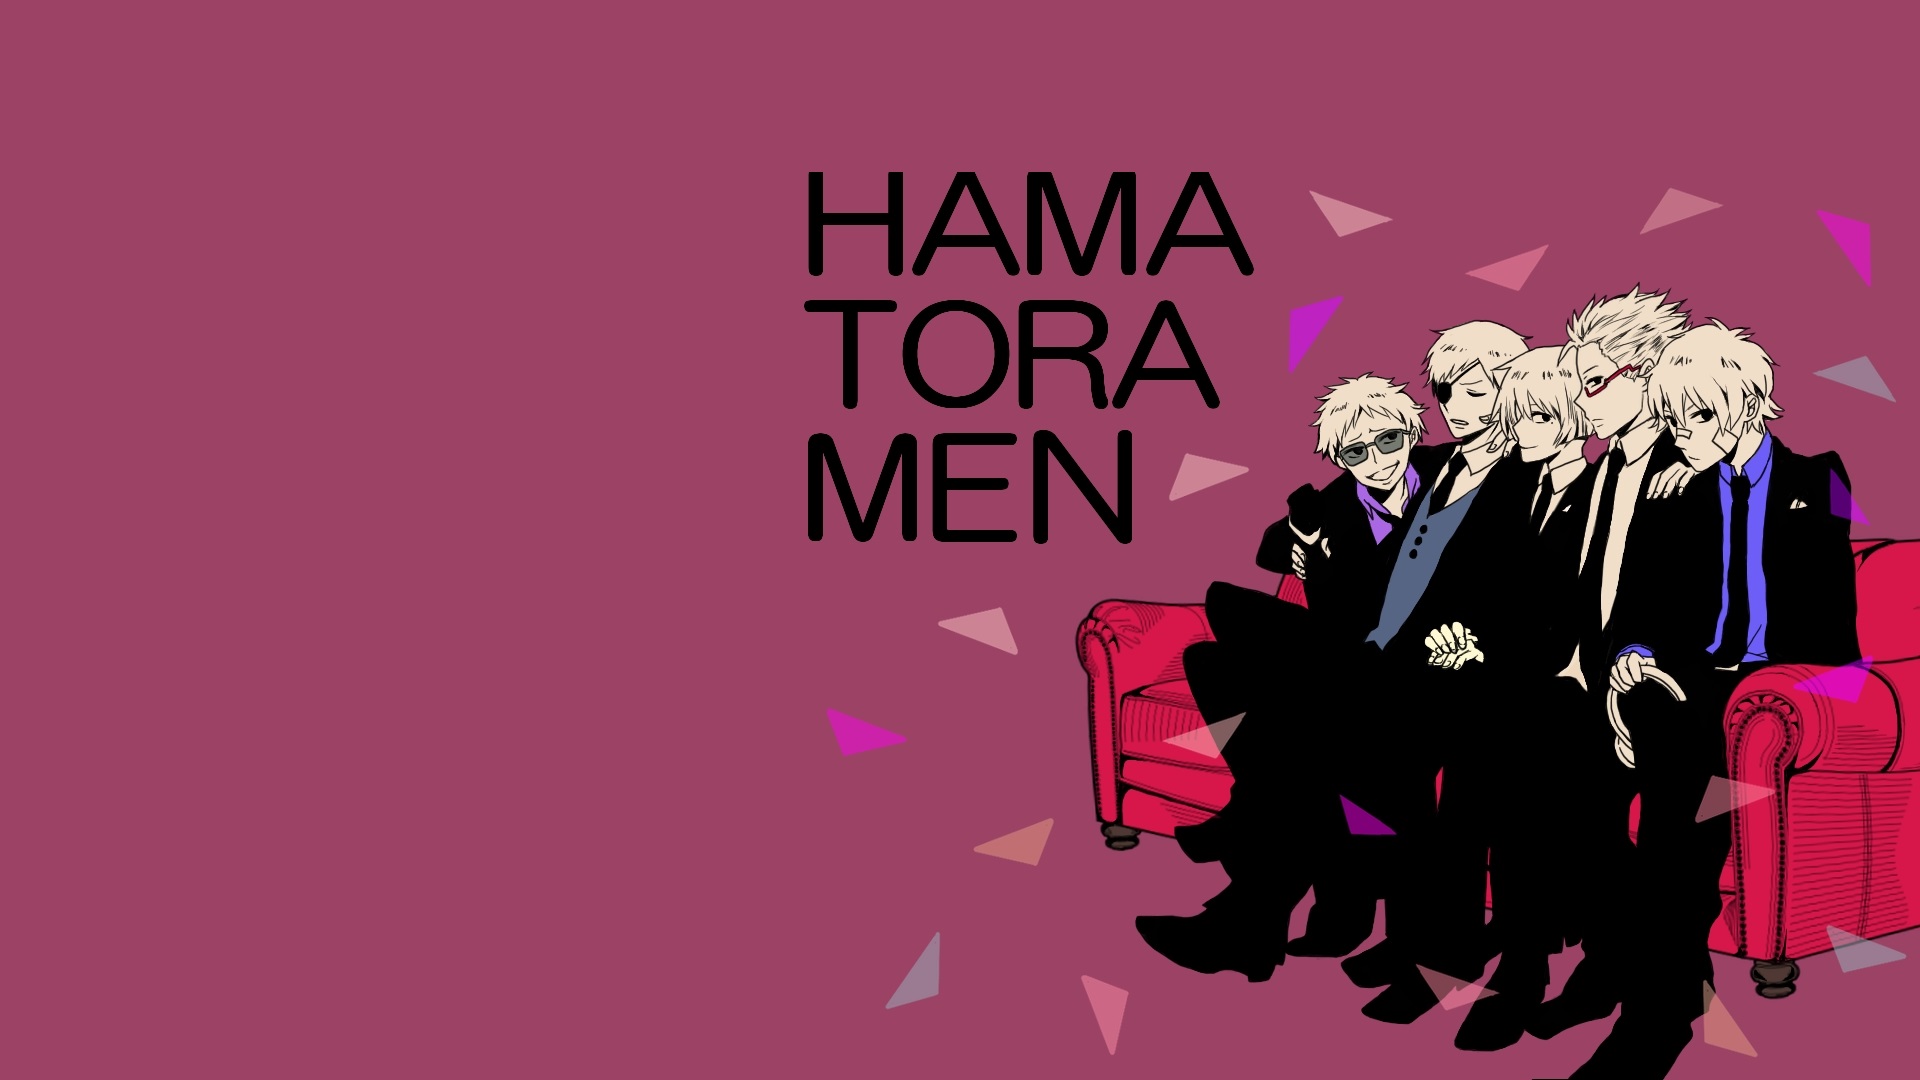 Anime Re:Hamatora HD Wallpaper | Background Image